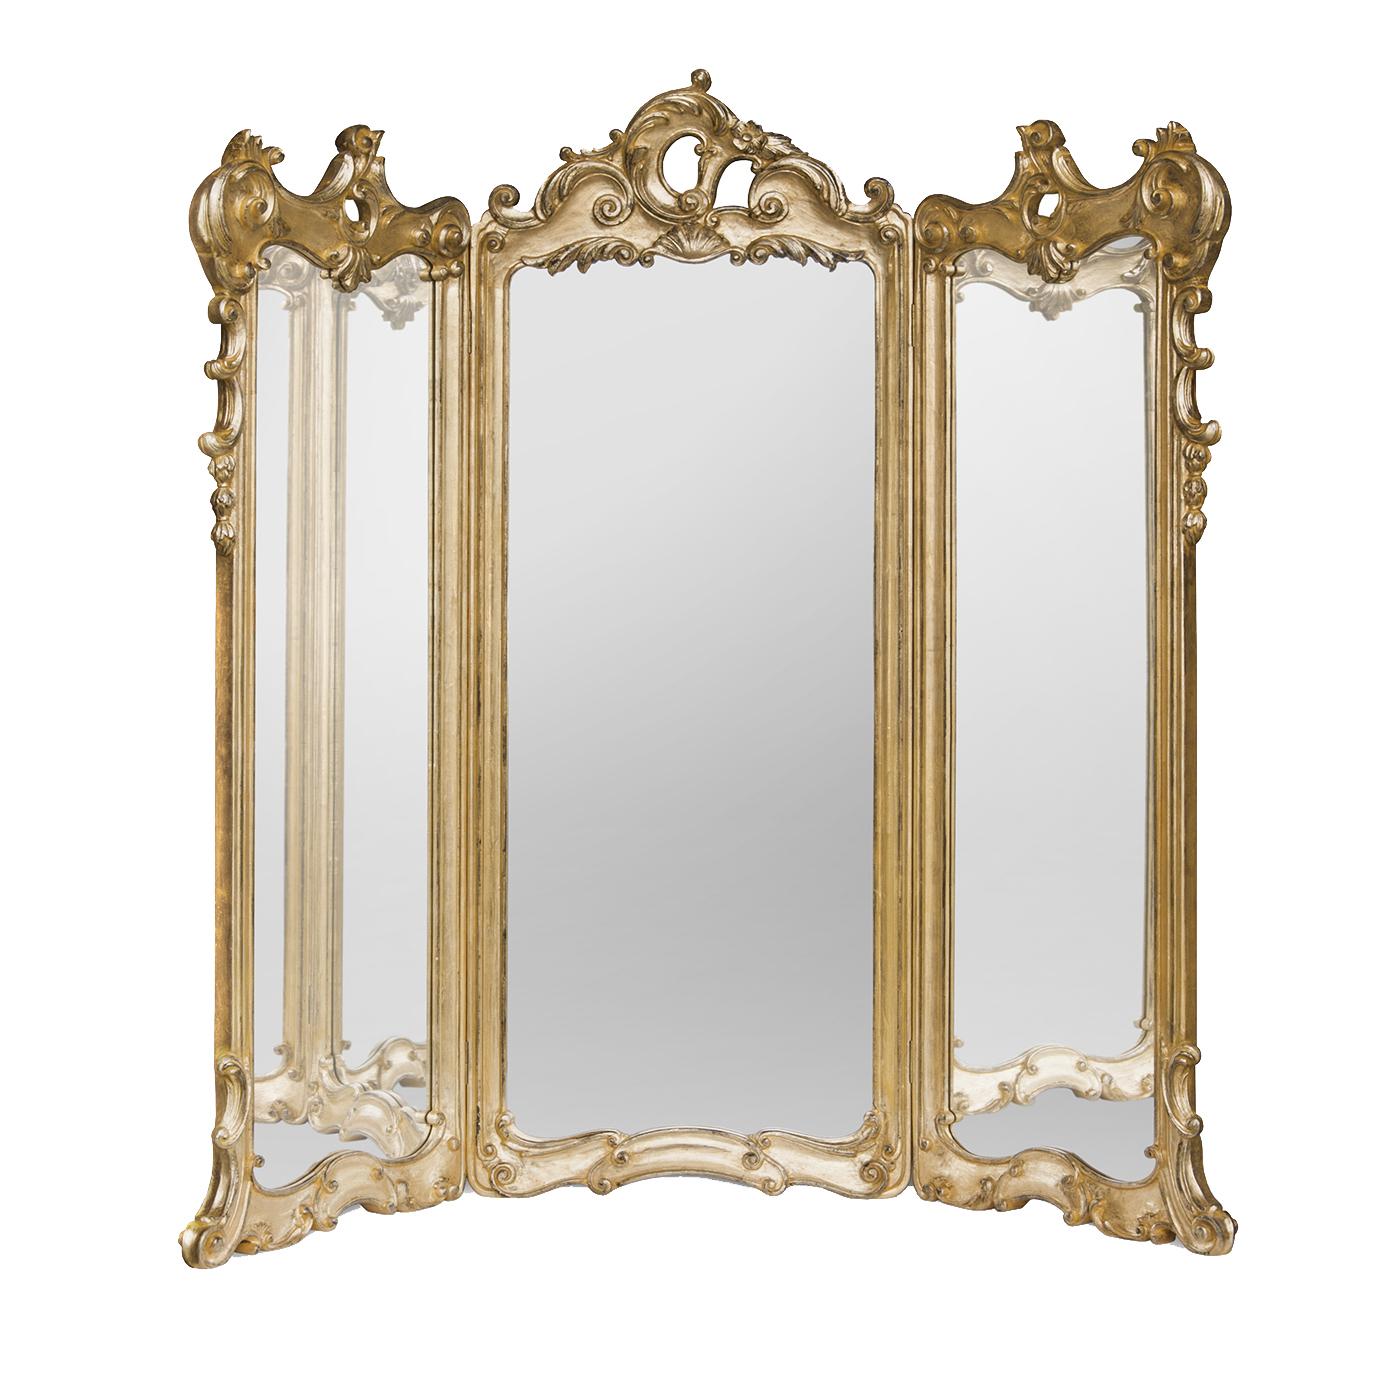 Italian Three-Part Mirror with Gold Leaf